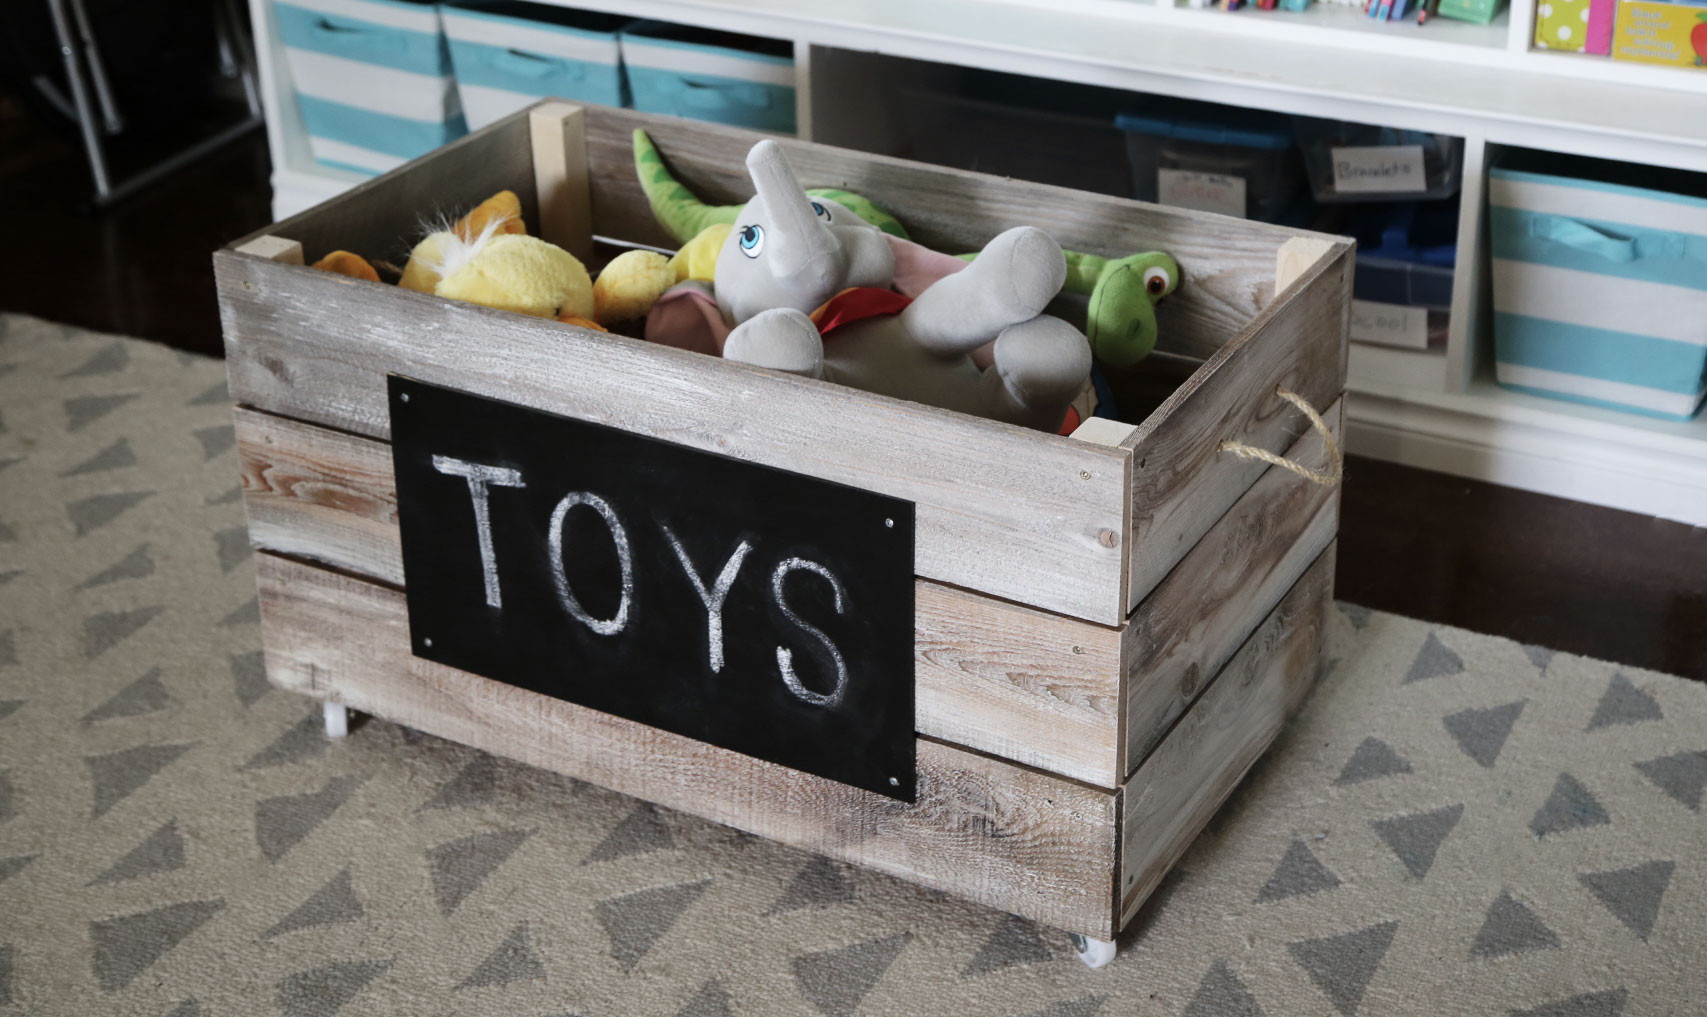 DIY Wood Toy Box
 18 Ways to Build a Wood Toy Box